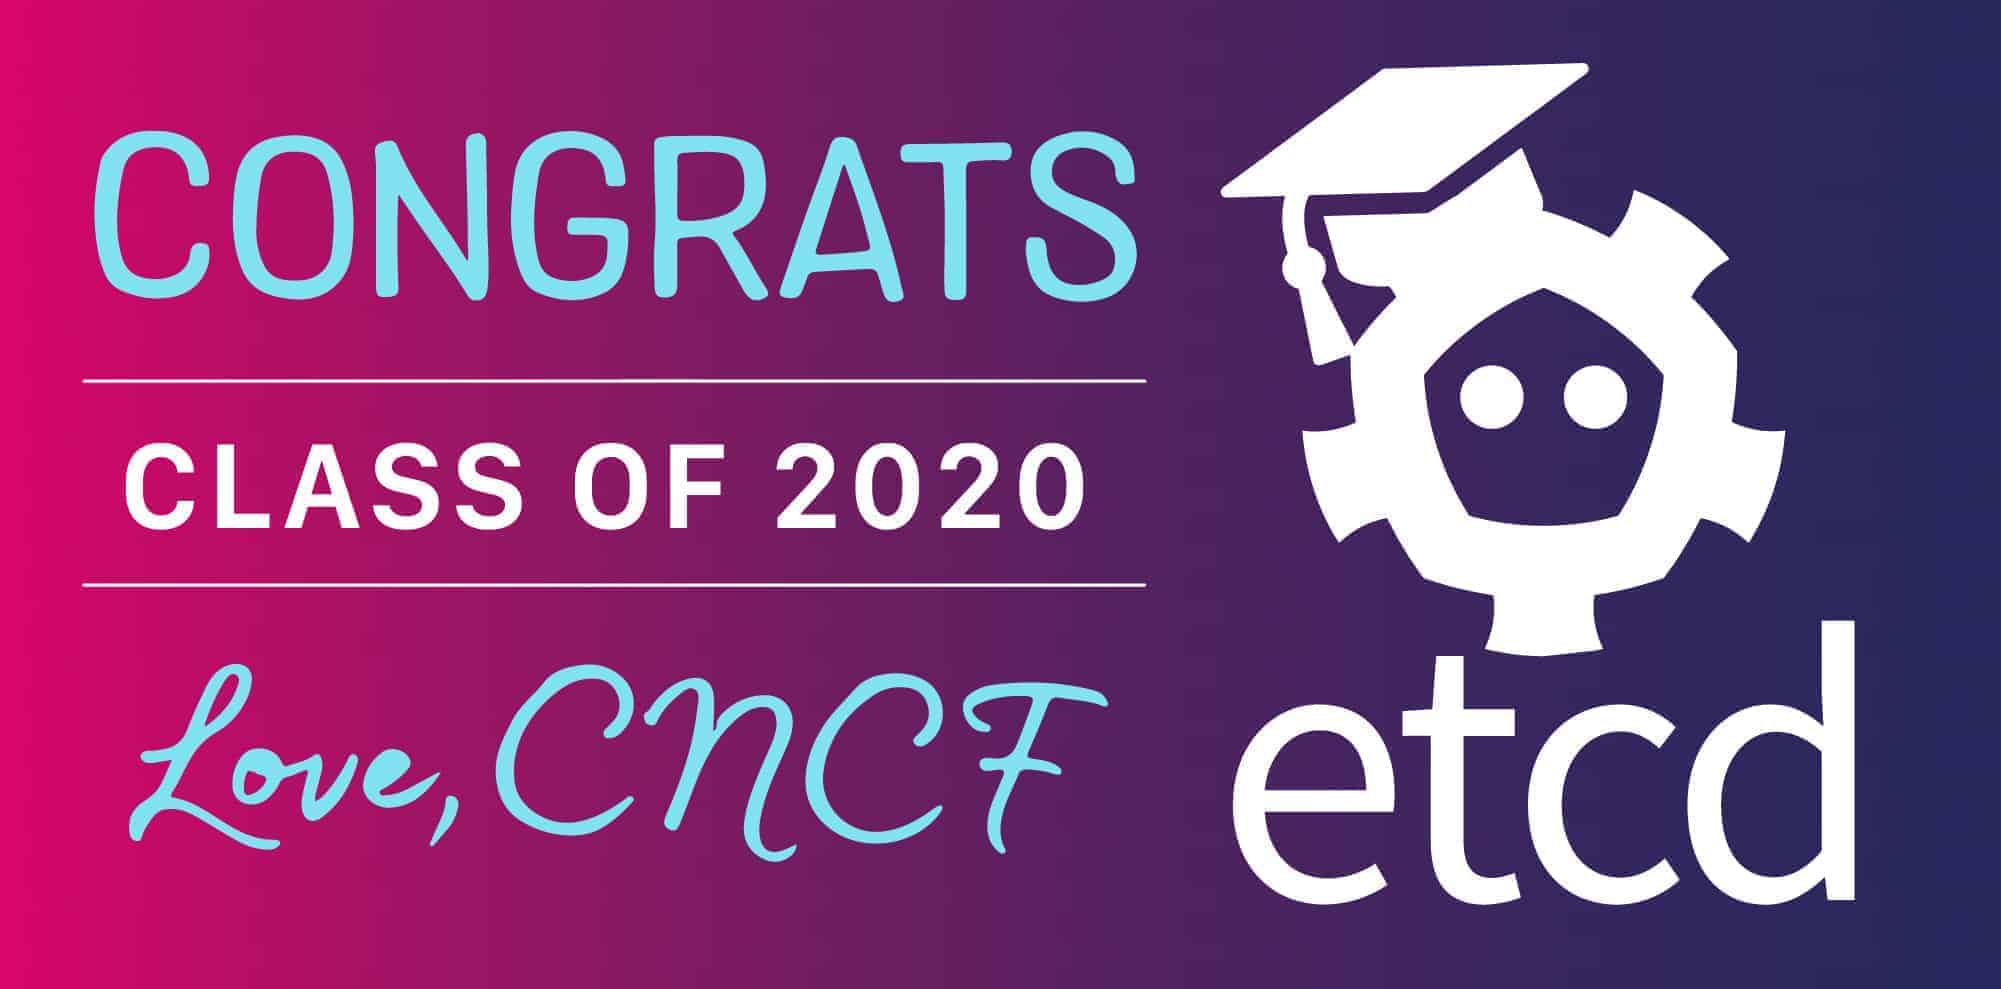 Cloud Native Computing Foundation Announces etcd Graduation